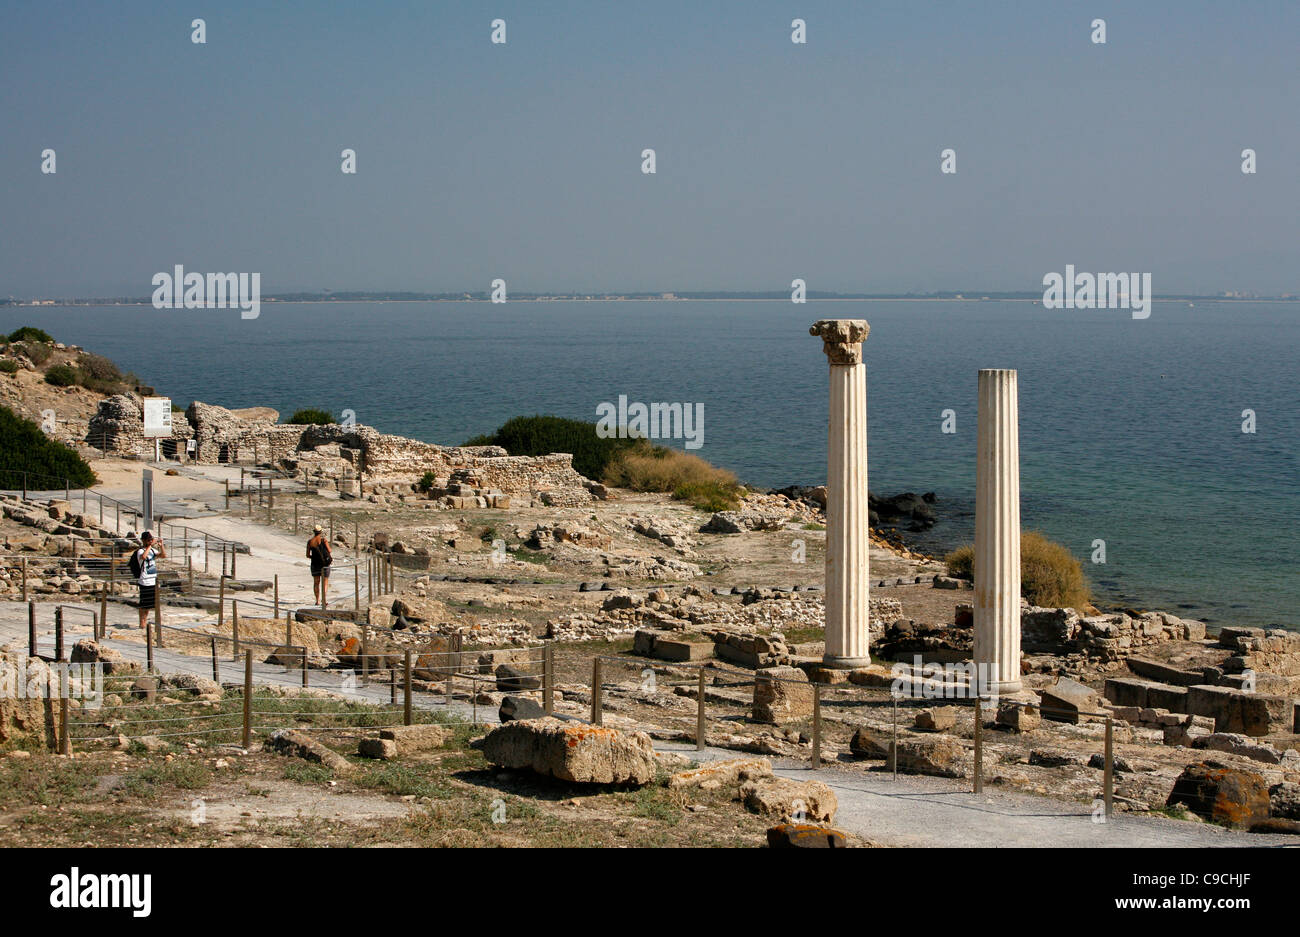 View over the ruins of Tharros and the columns of Tempio Tetrastilo, Sinis peninsula, Sardinia, Italy. Stock Photo